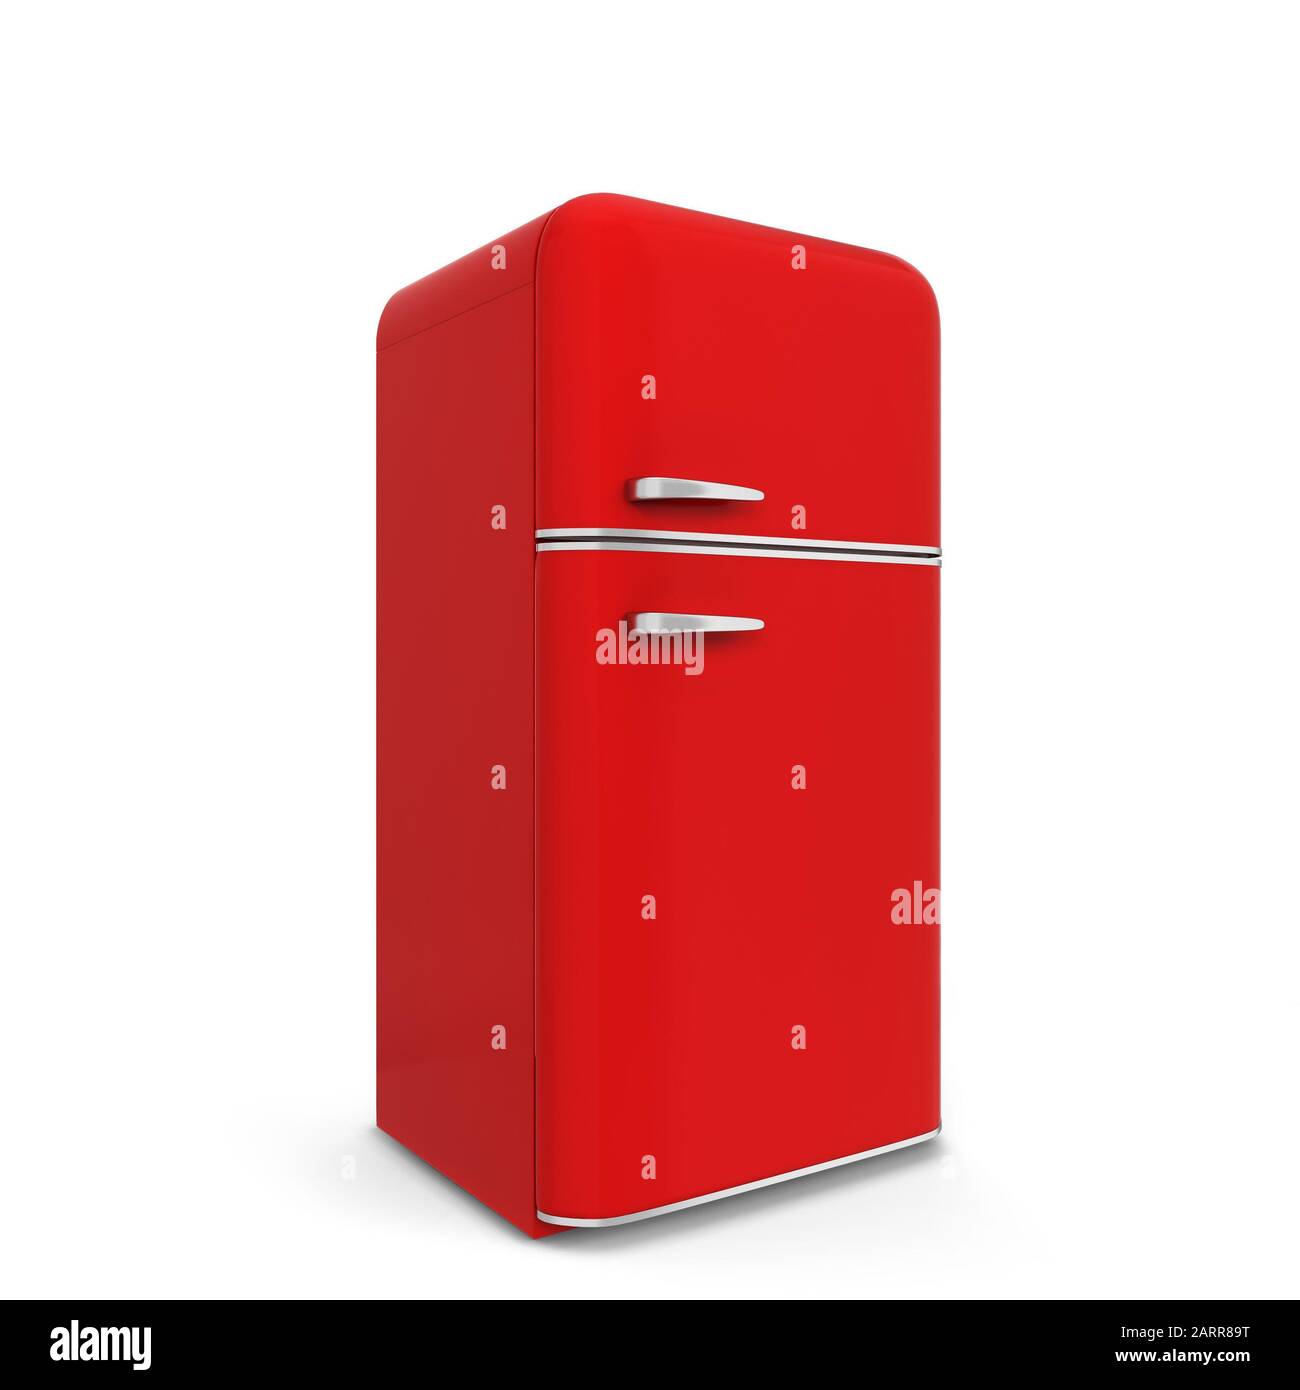 Retro Kitchen Appliance 3d Rendering Of Vintage Red Refrigerator